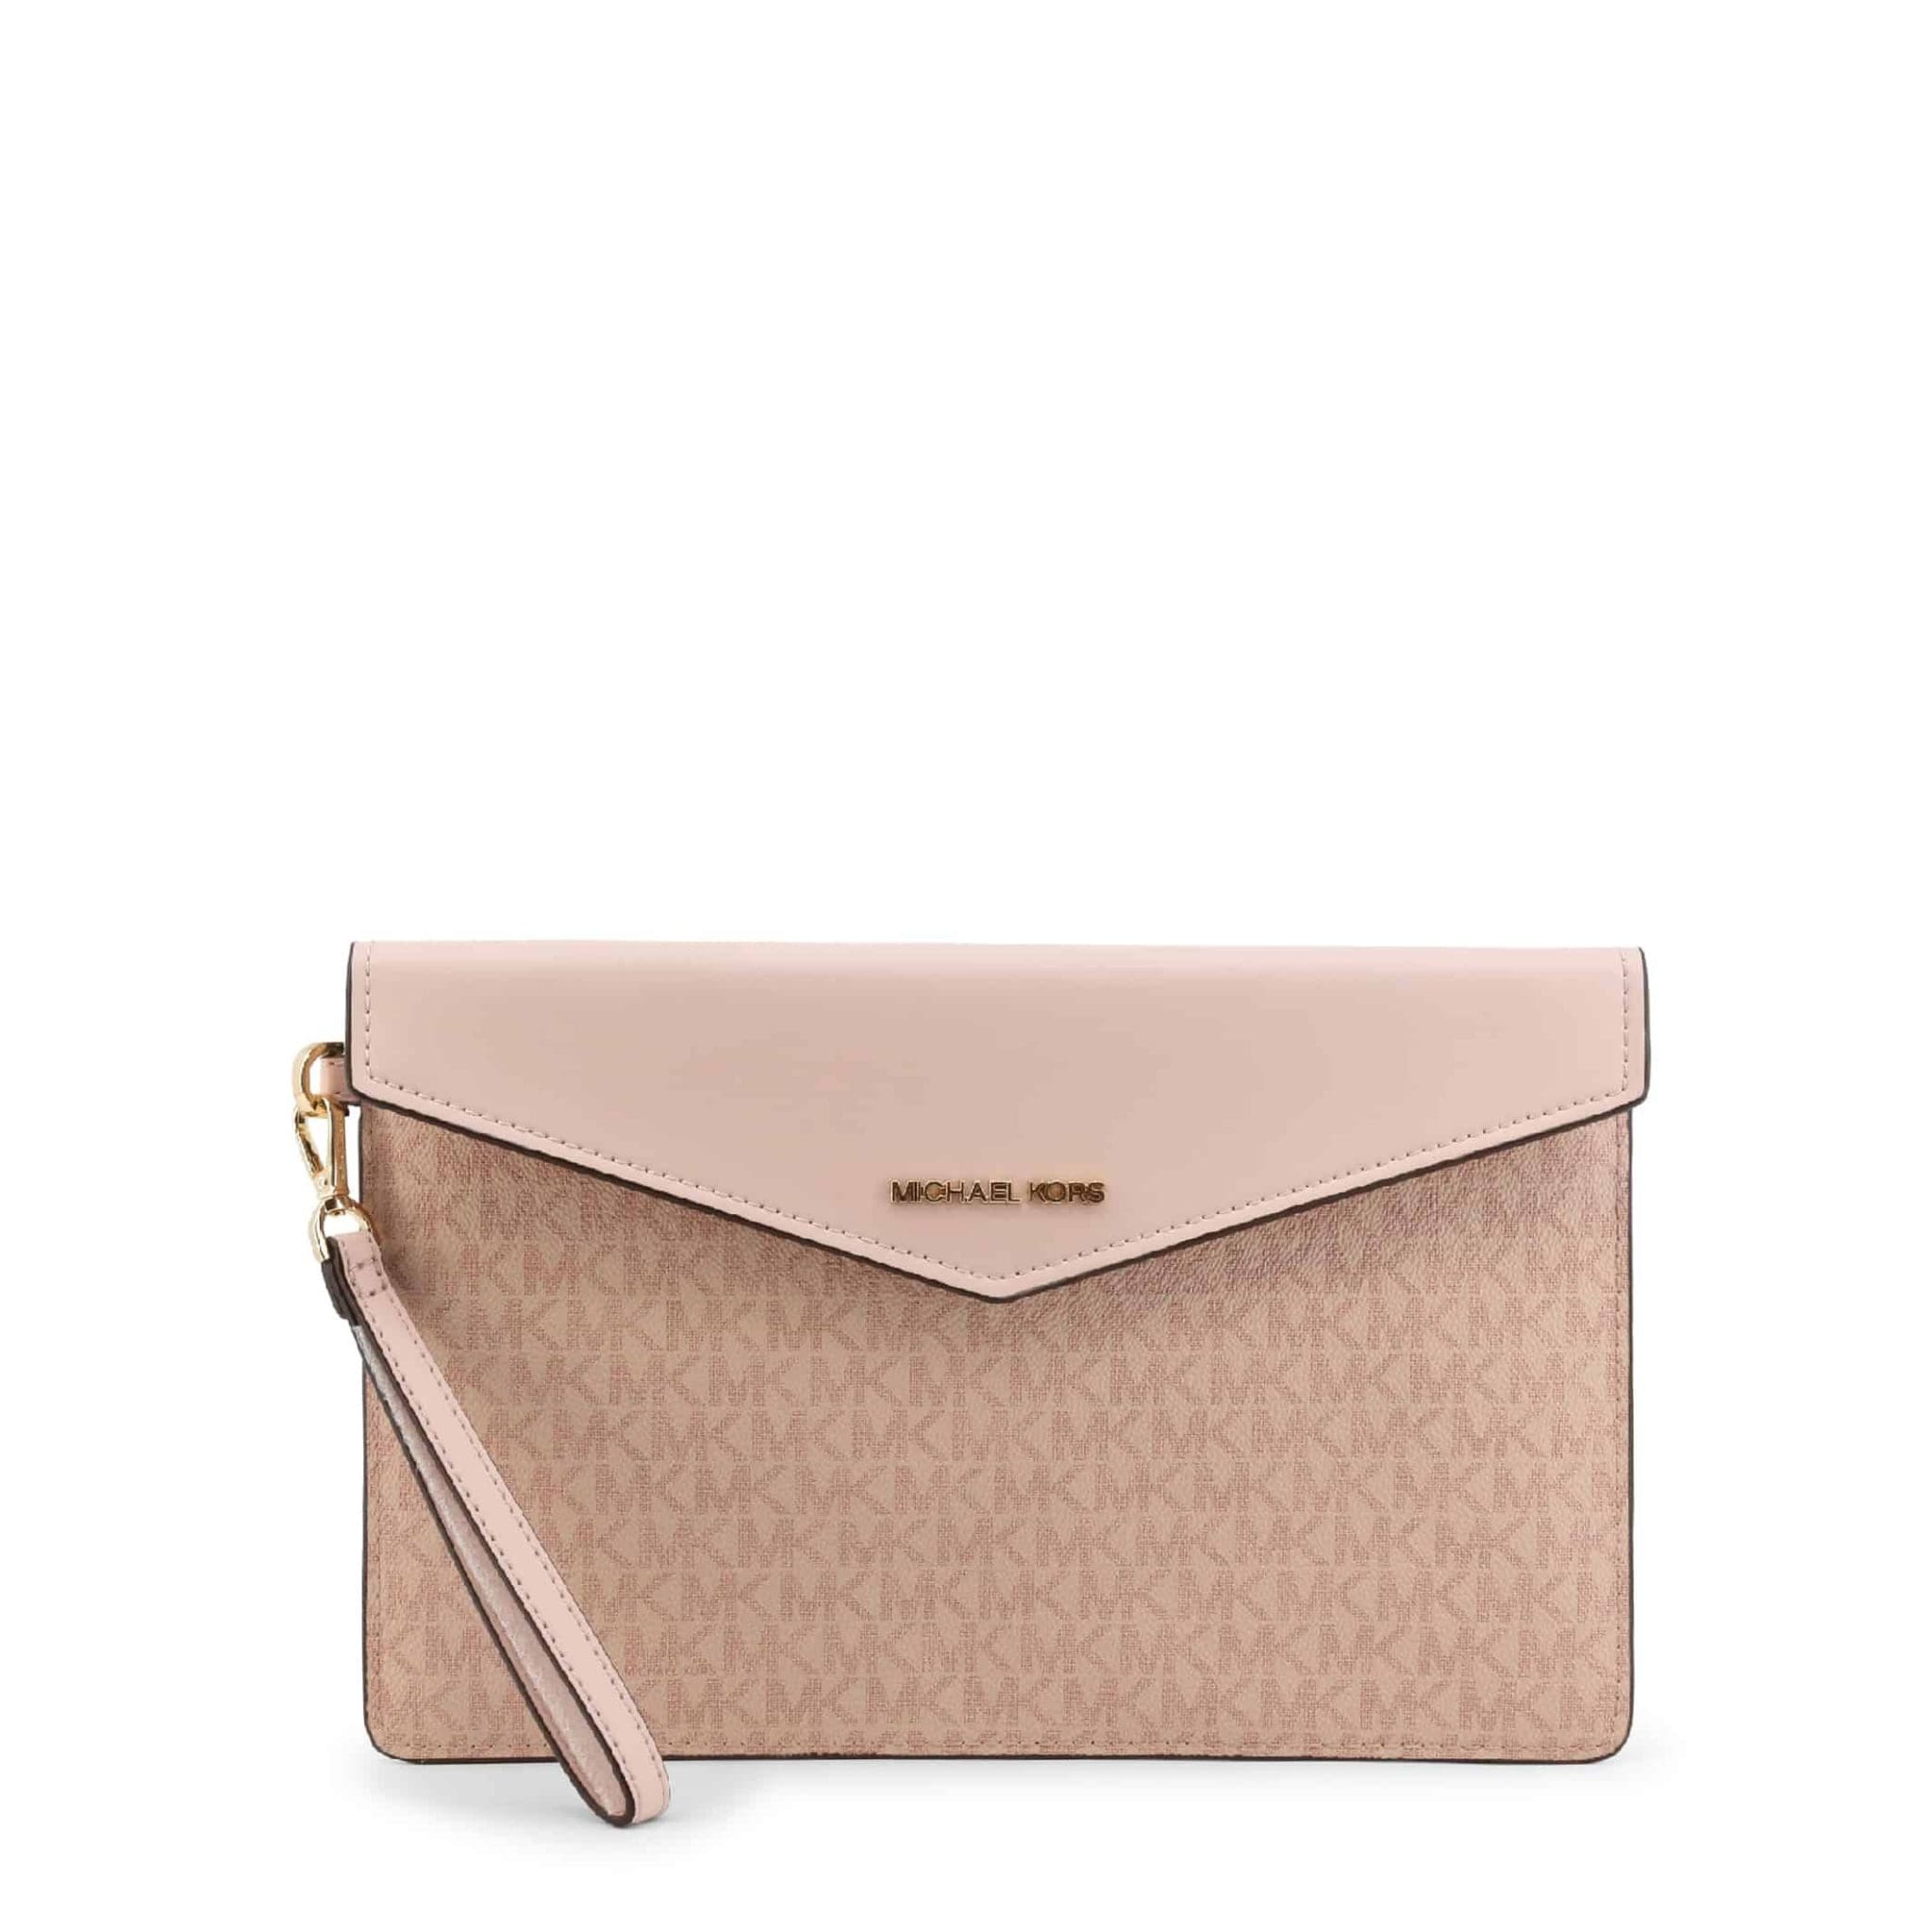 Michael Kors Shopping Bag Pink - Maisie_35T1G5Mt7T 6